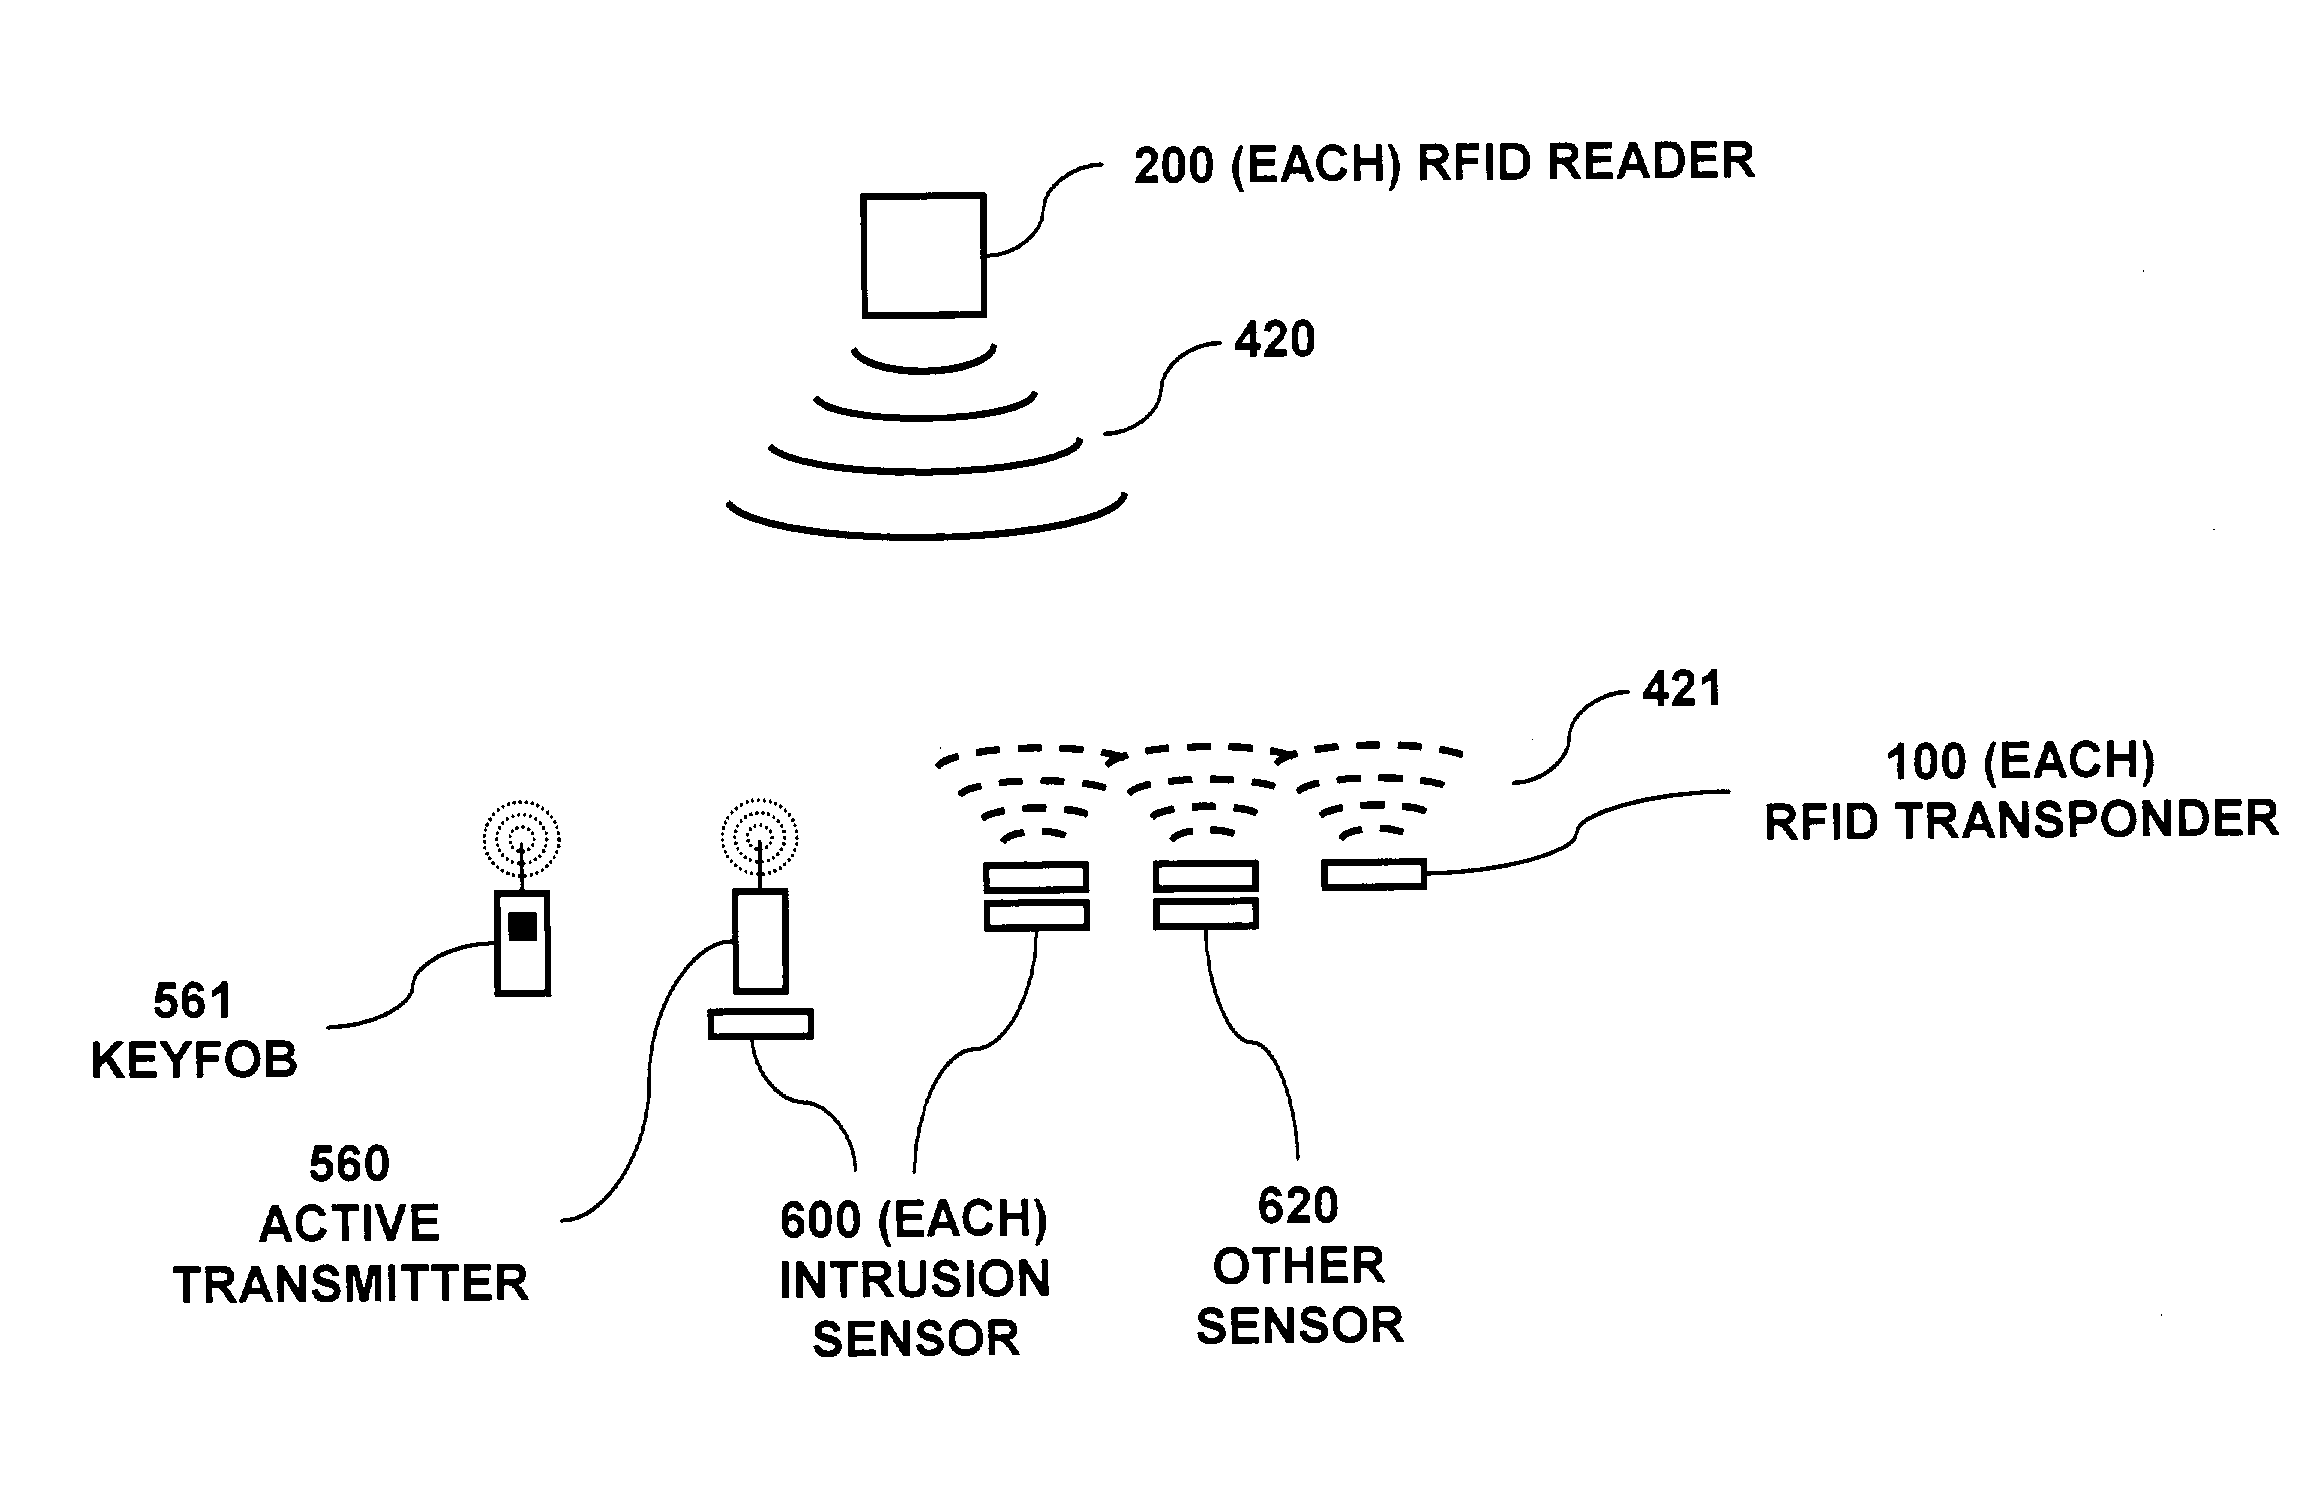 RFID based security network